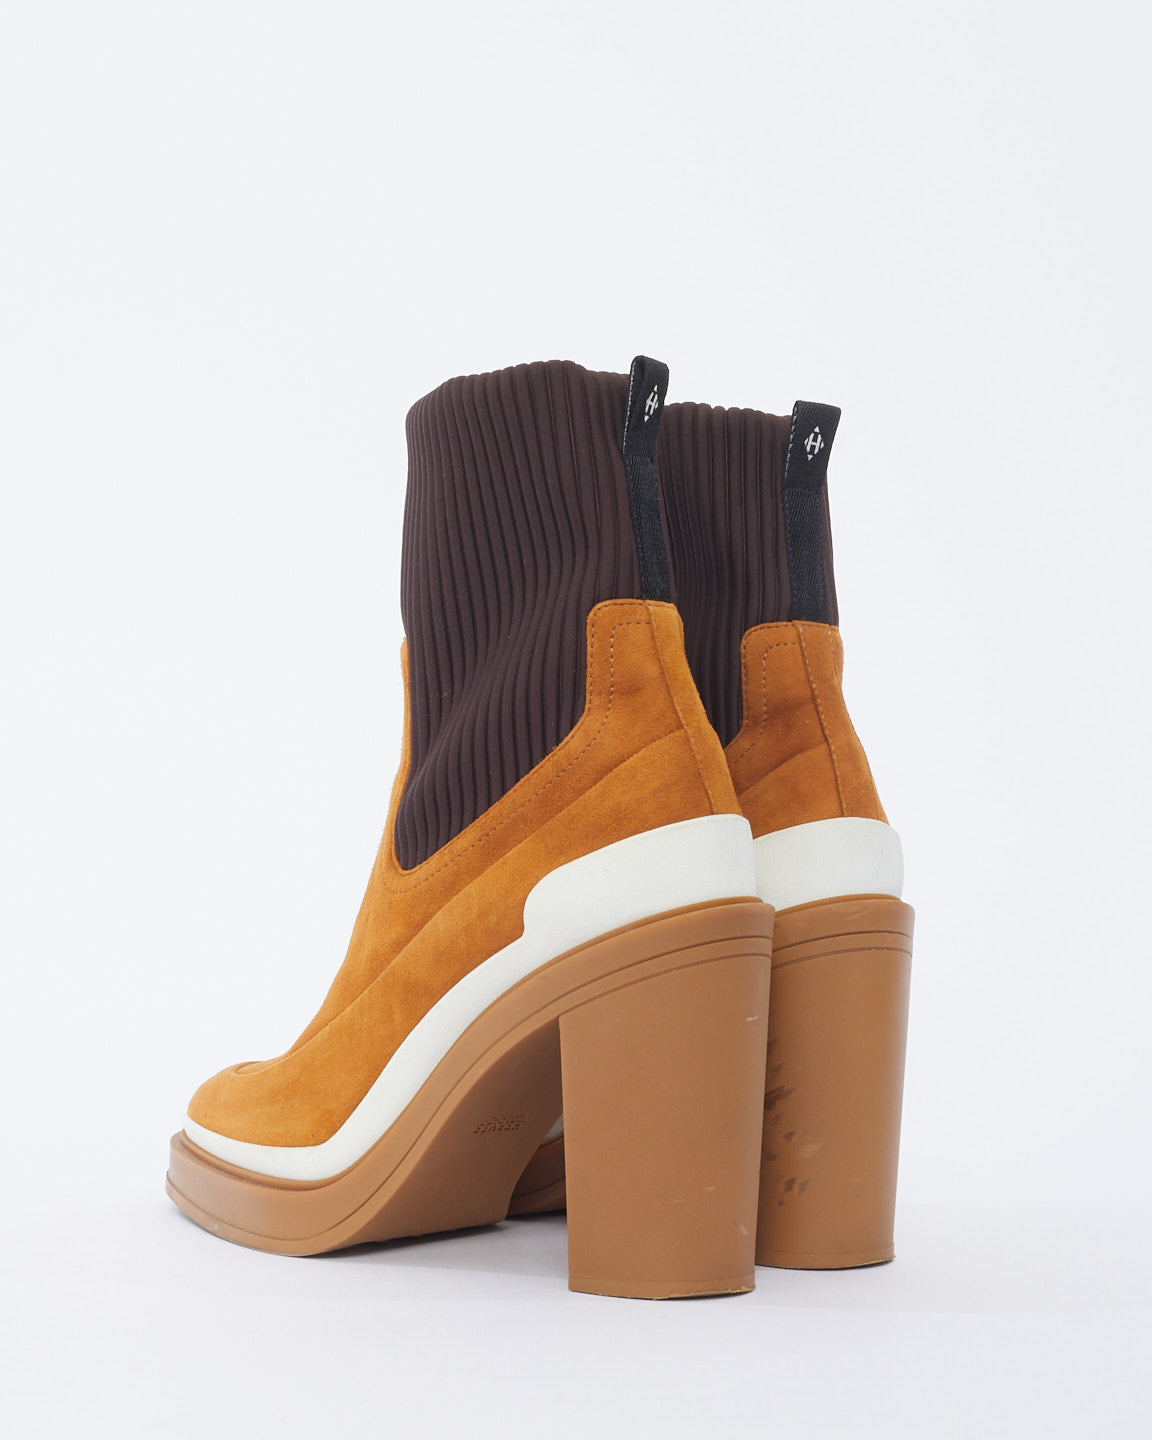 Hermès Tan Suede Vandal Ankle Boots - 40